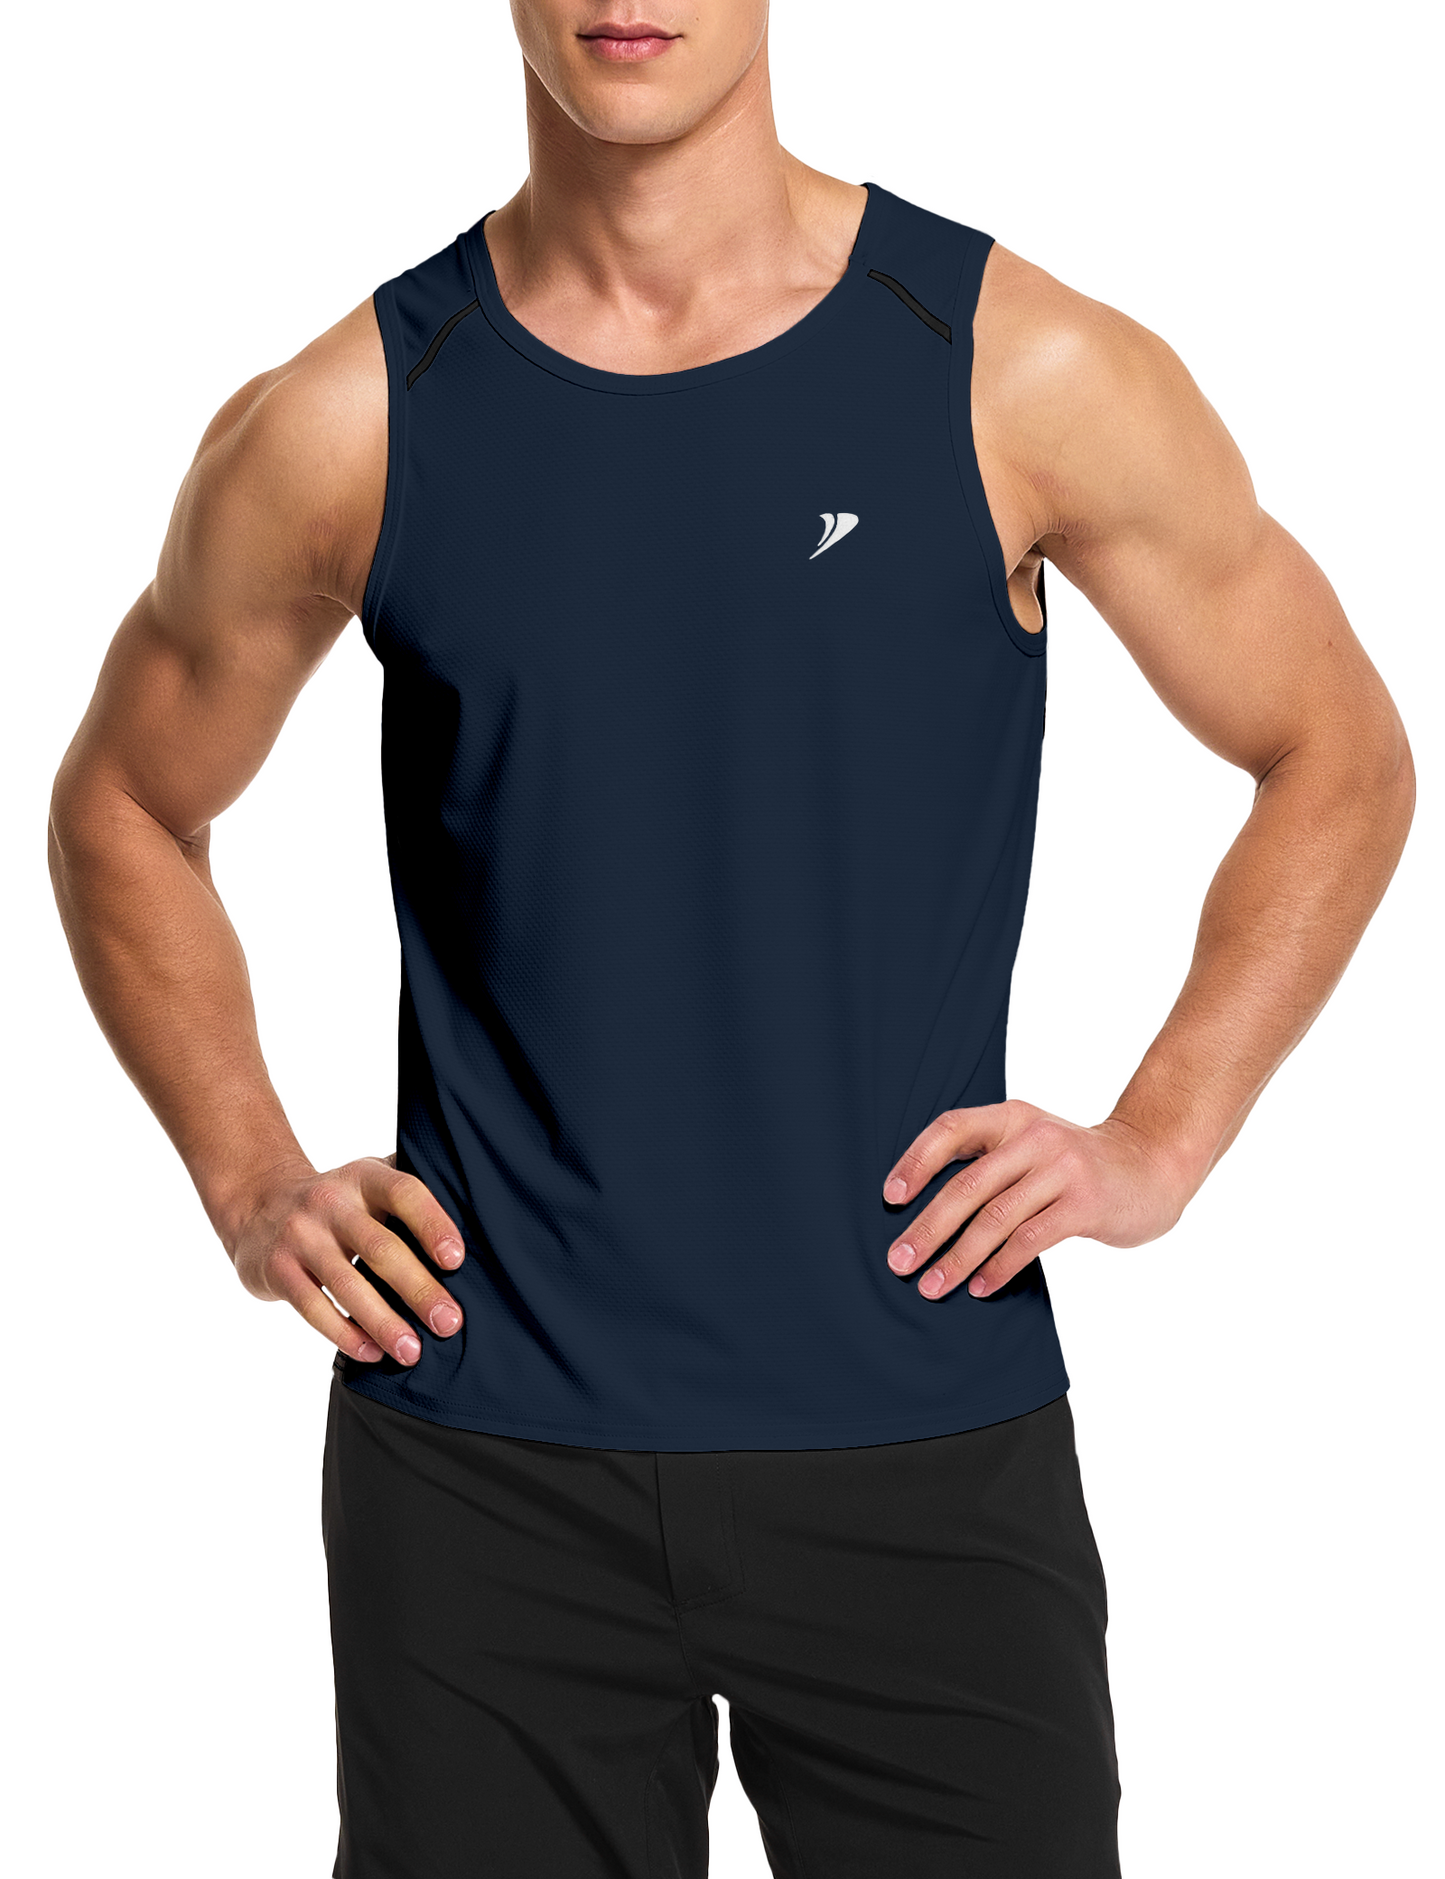 mens running workout gym swim tank top navy blue